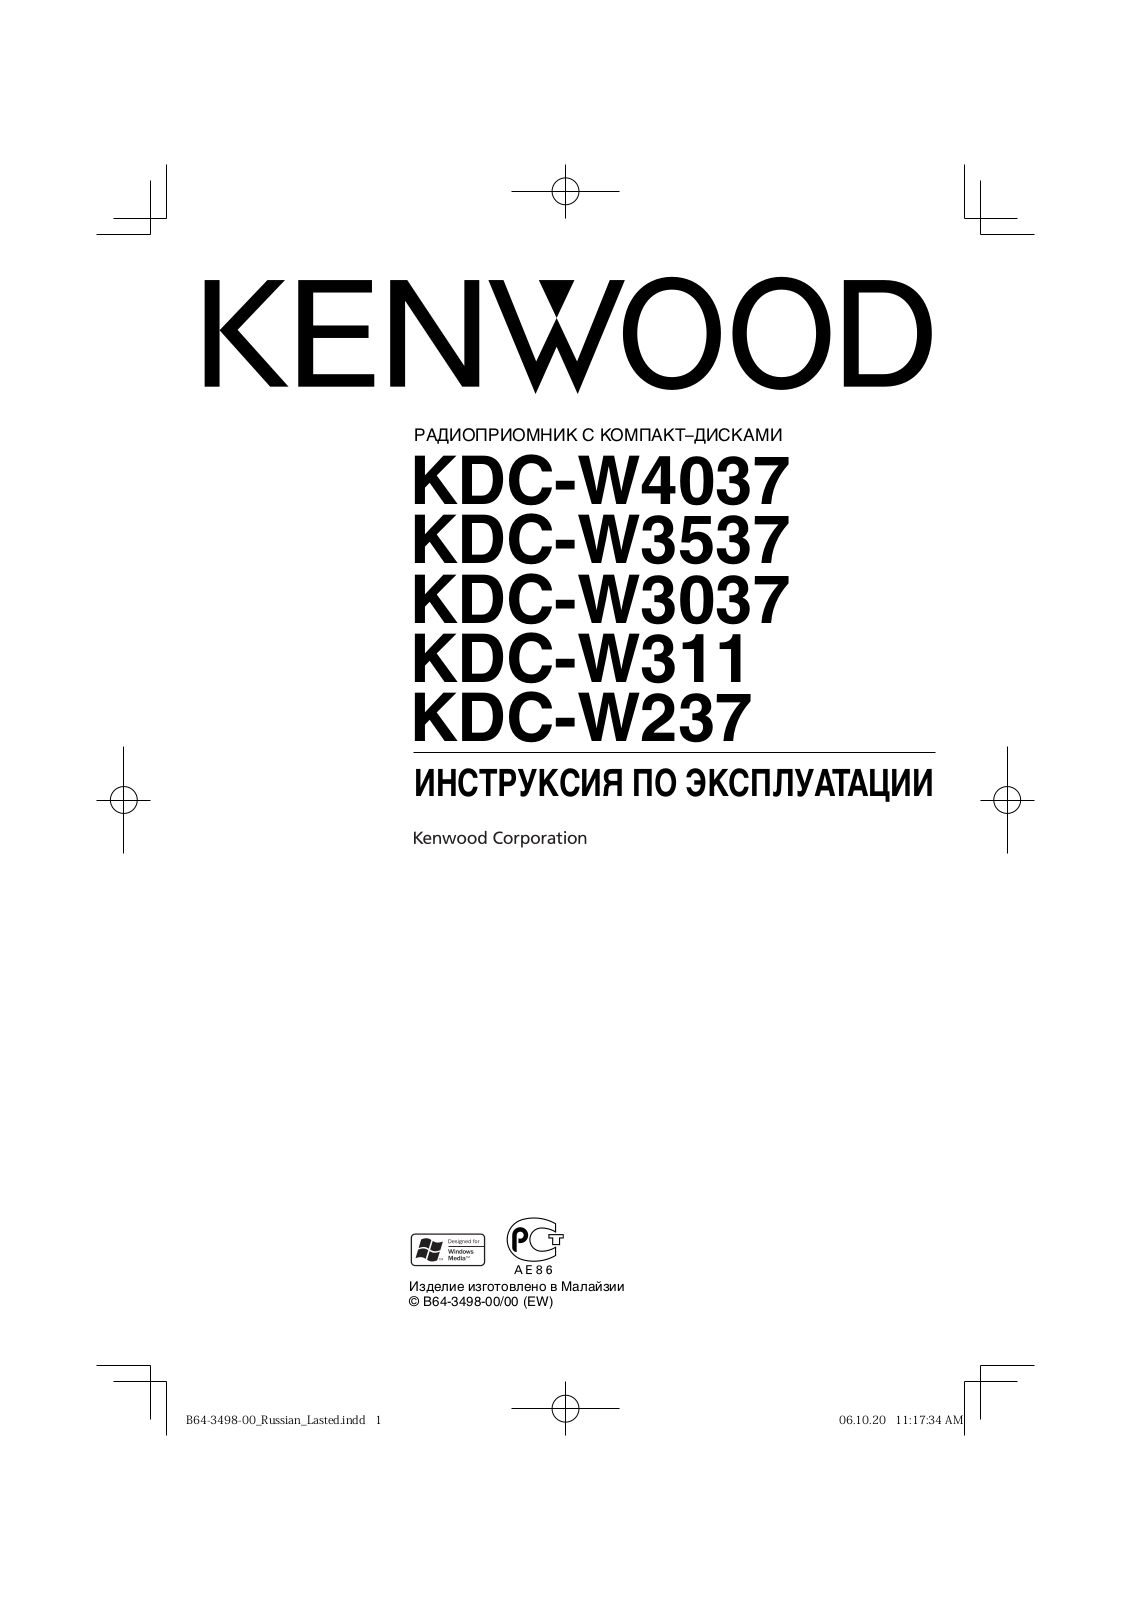 Kenwood KDC-W3537GY User Manual